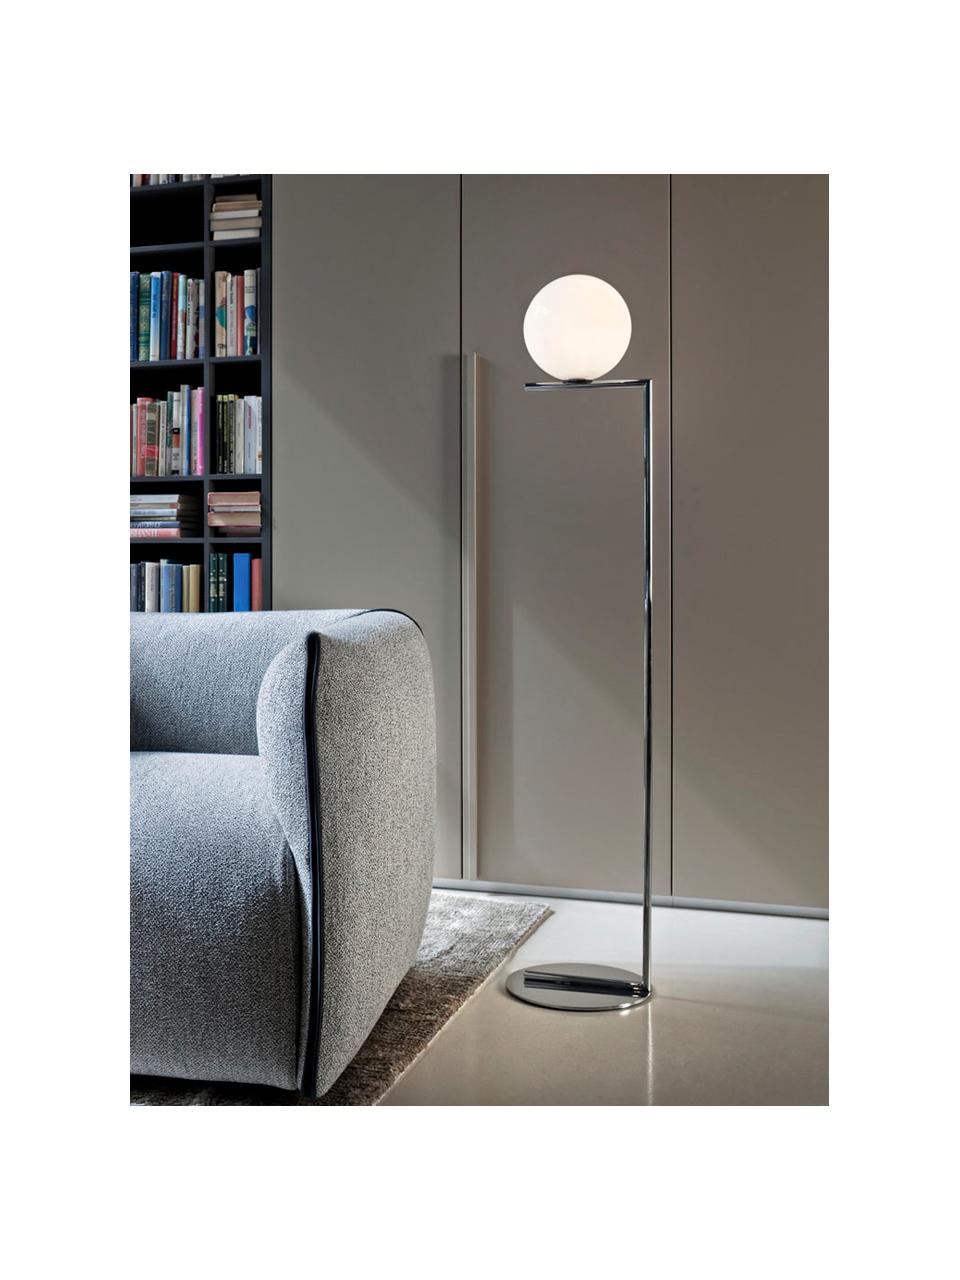 Dimmbare Stehlampe IC Lights, Lampenschirm: Glas, Silberfarben, H 135 cm